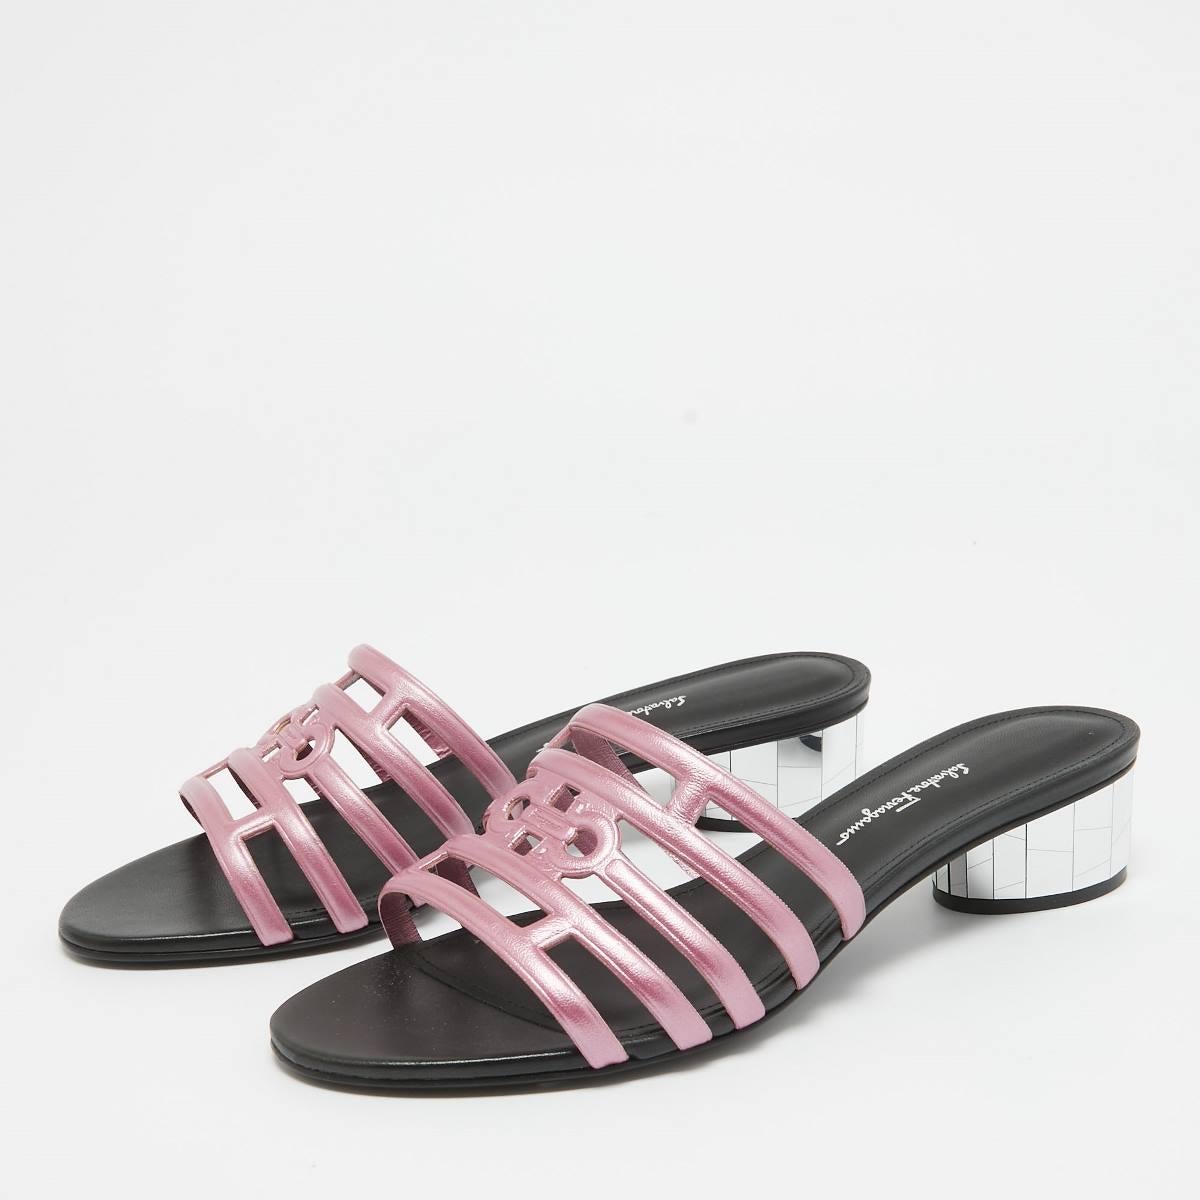 Salvatore Ferragamo Pink/Black Leather Finn Slide Sandals Size 39.5 5